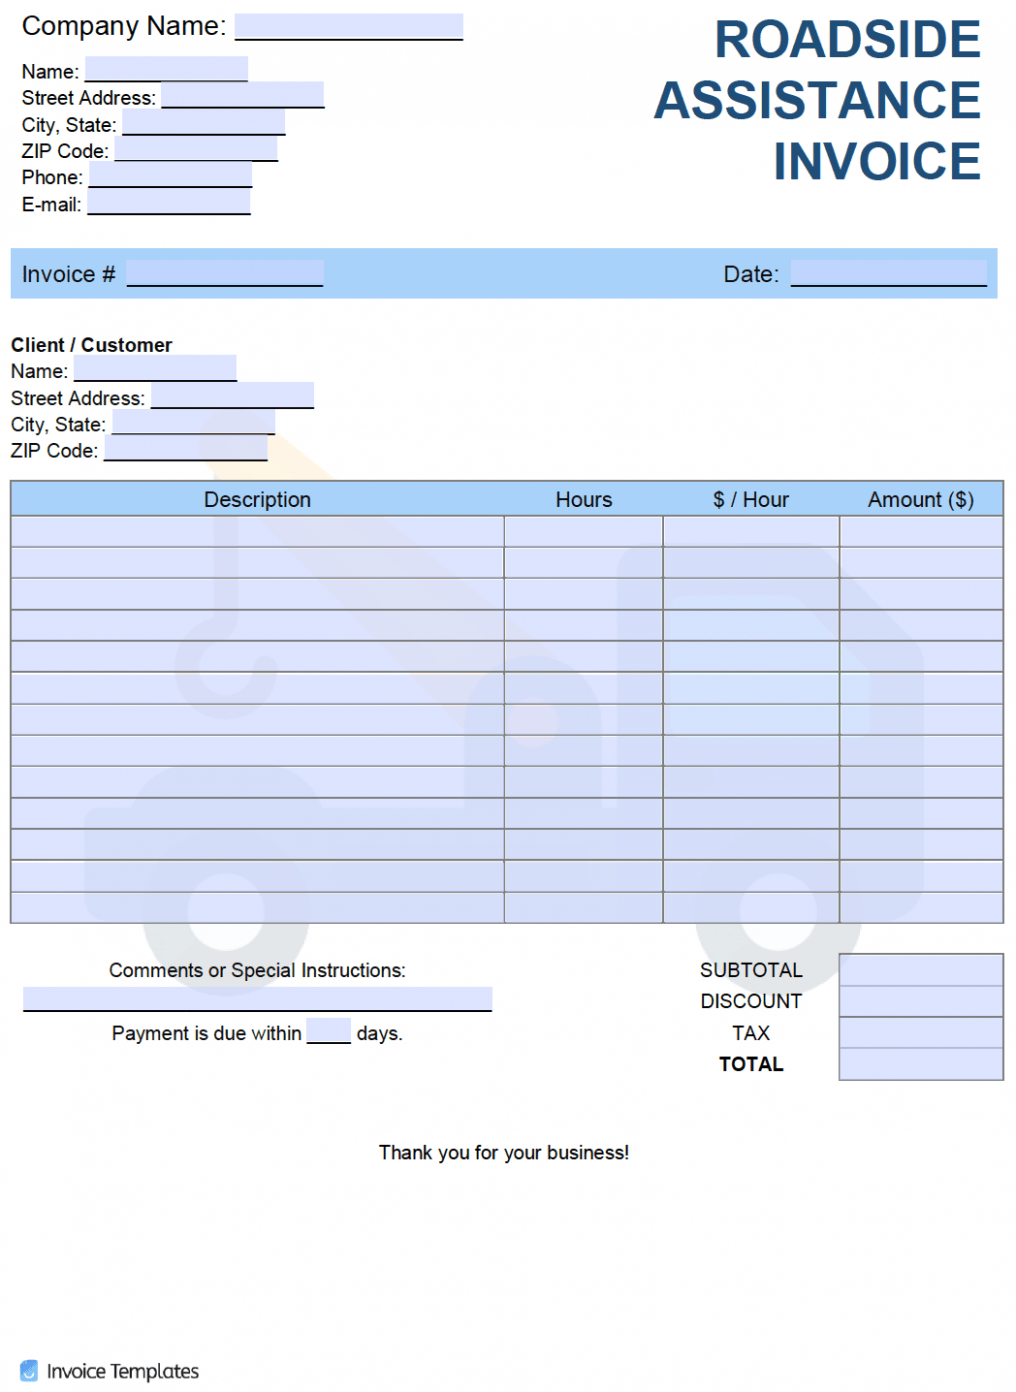 Sample Road Service Invoice Template PDF